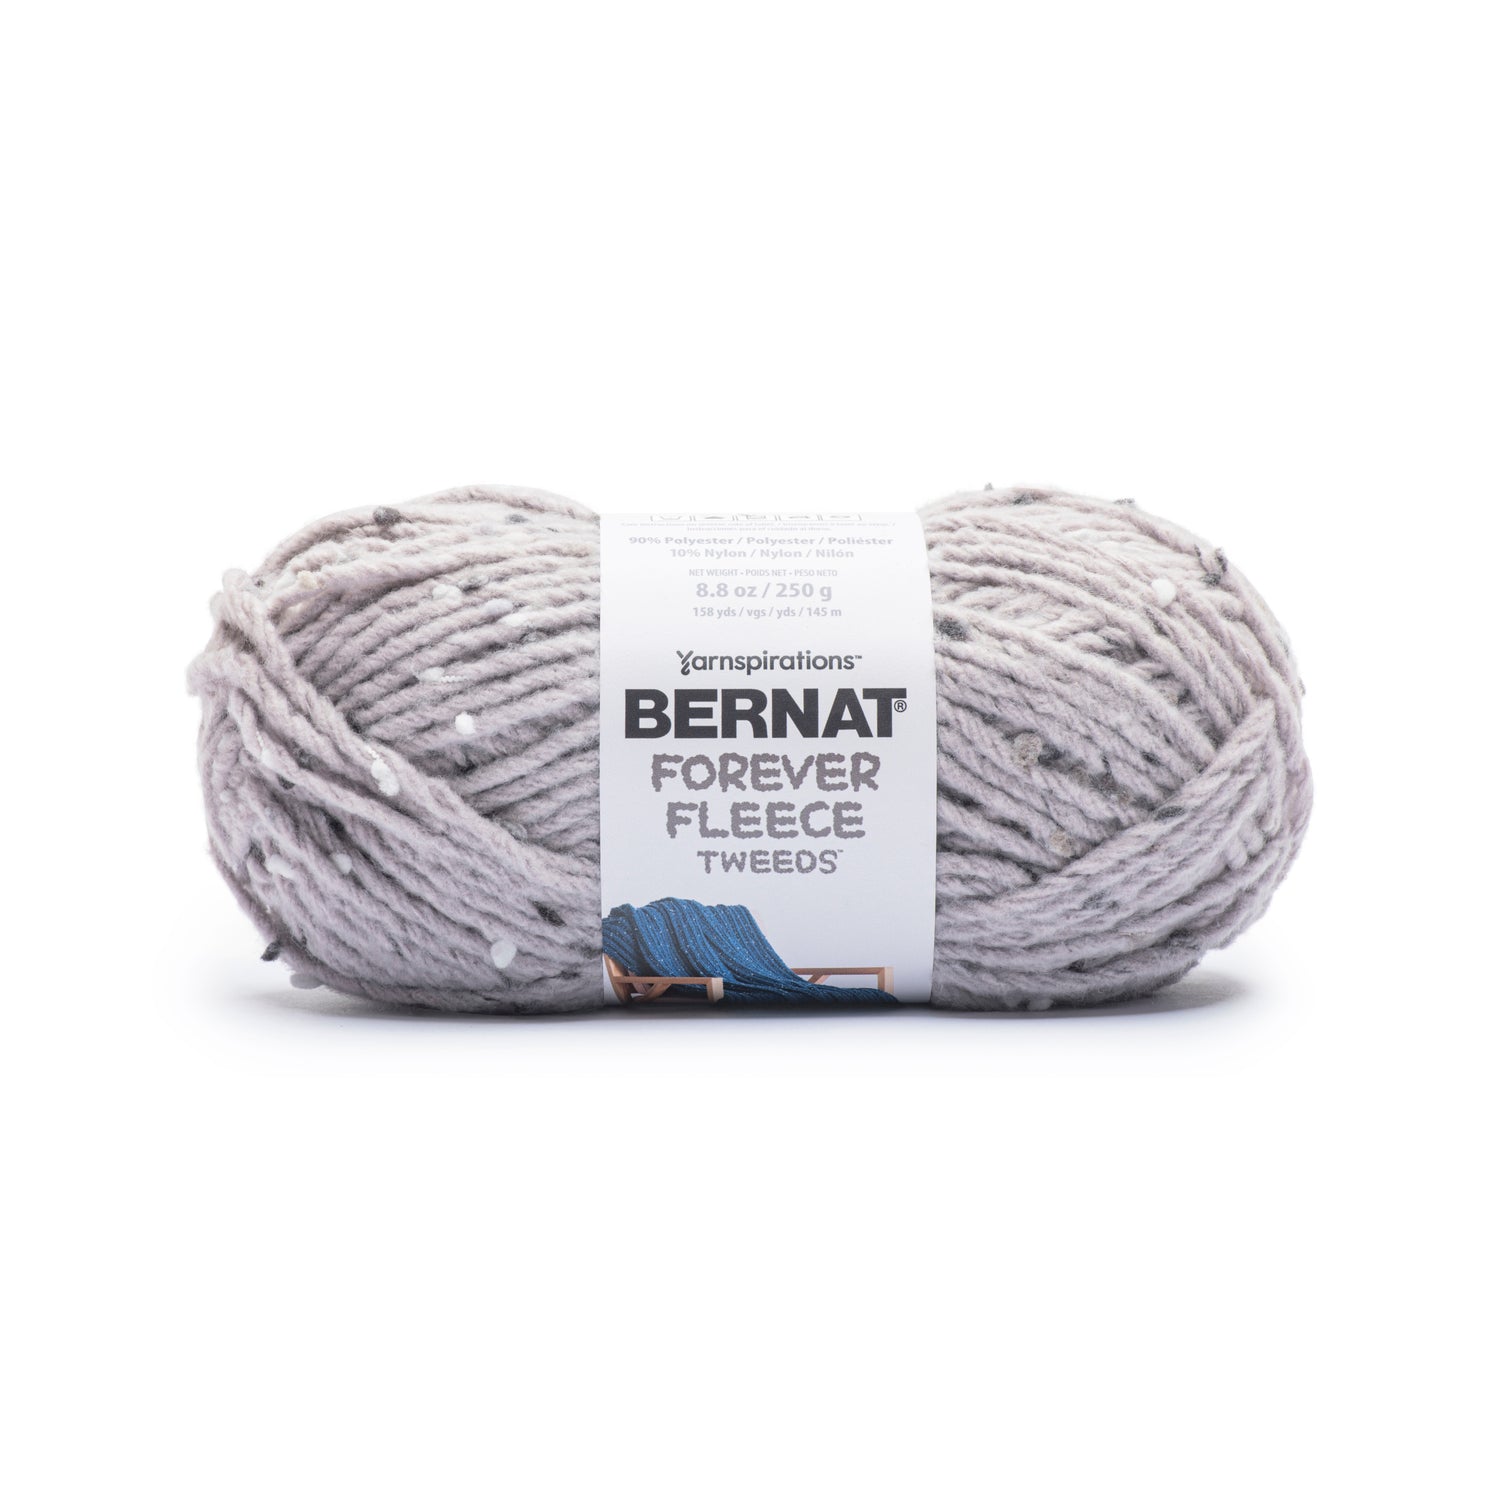 Bernat Forever Fleece Tweeds Yarn (250g/8.8oz)